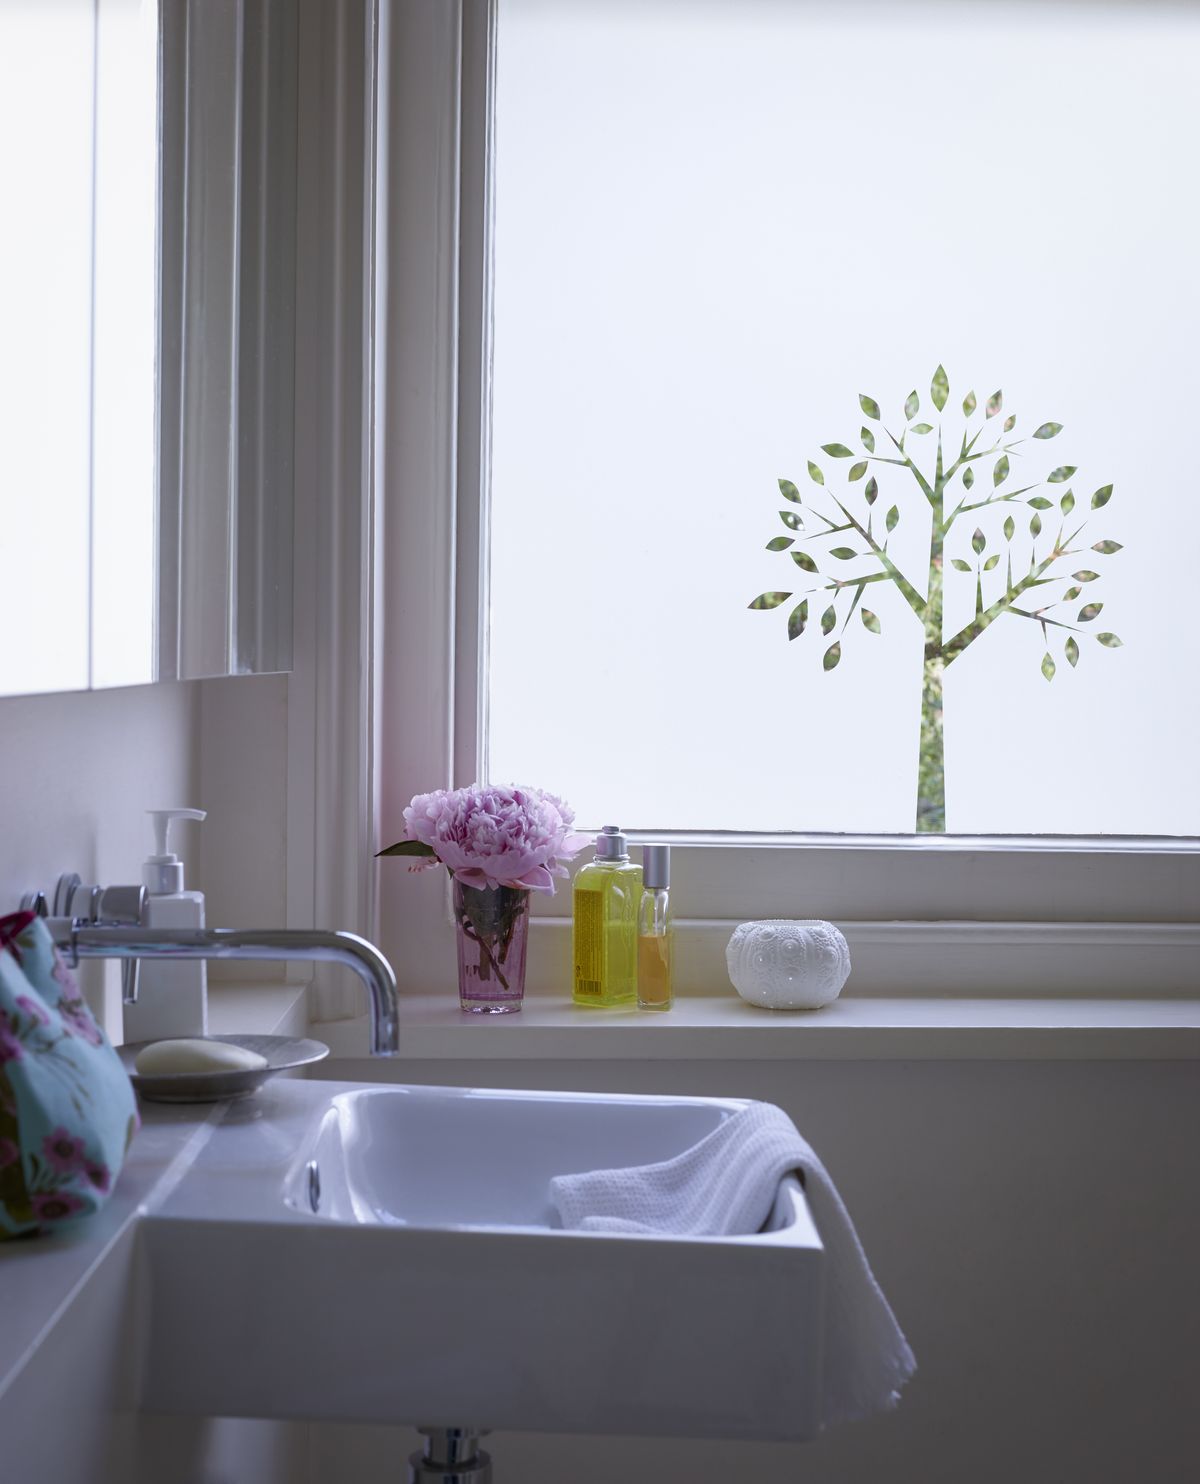 Bathroom window treatment ideas – 11 ways to frame your windows